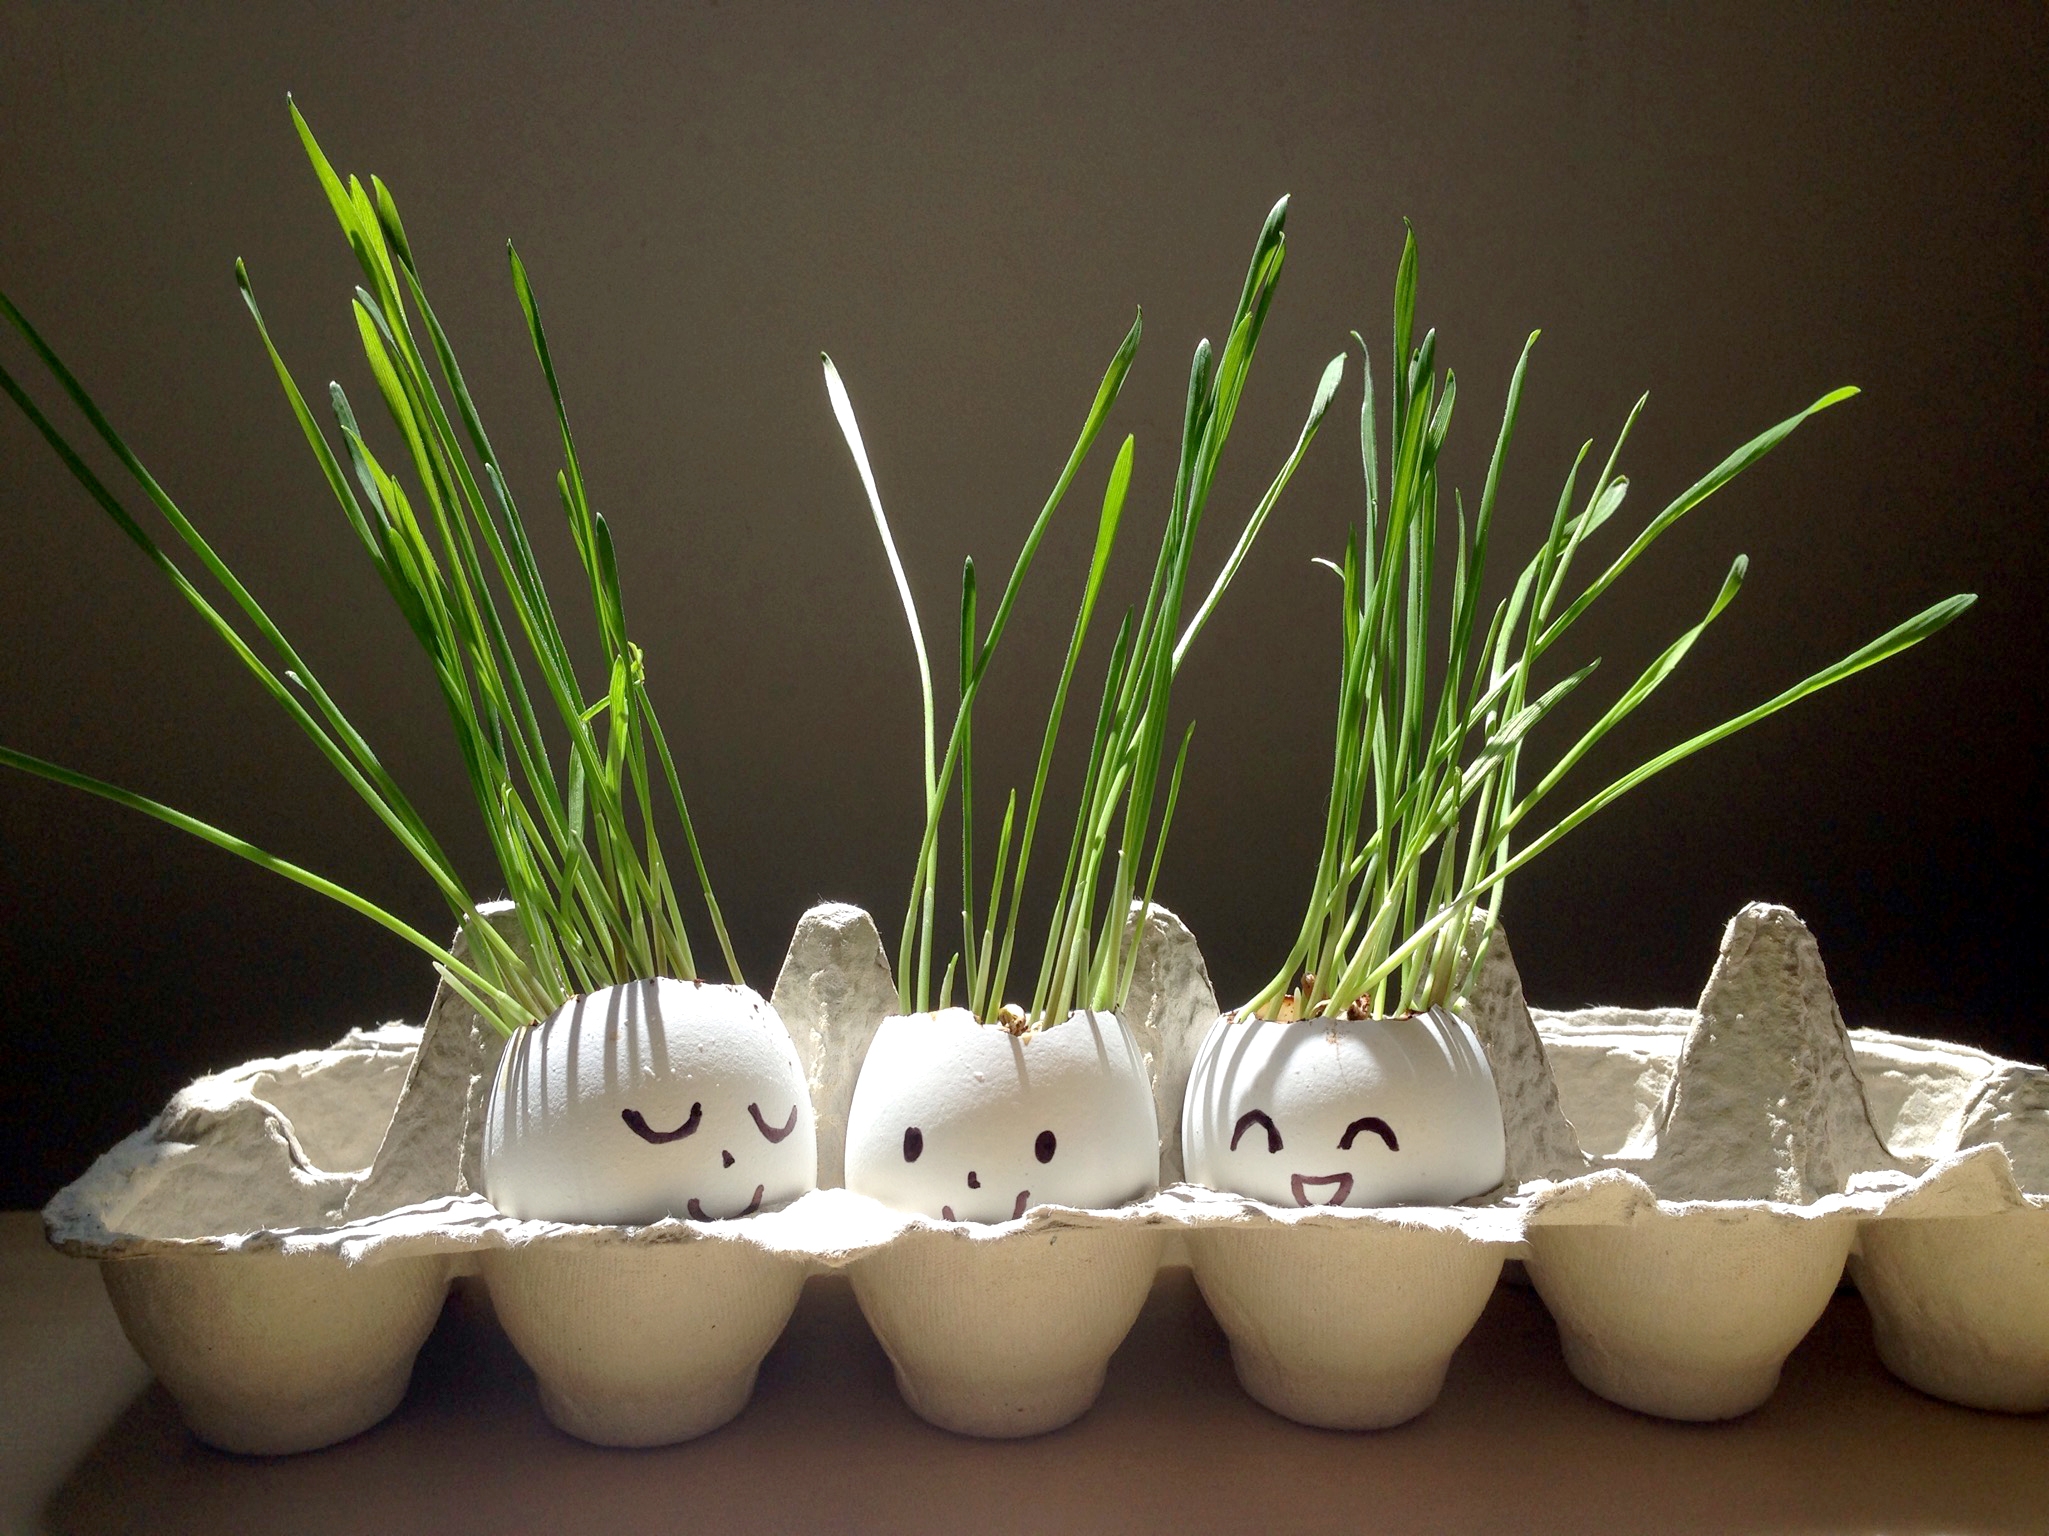 growing grass in an eggshell — pleasure in simple things